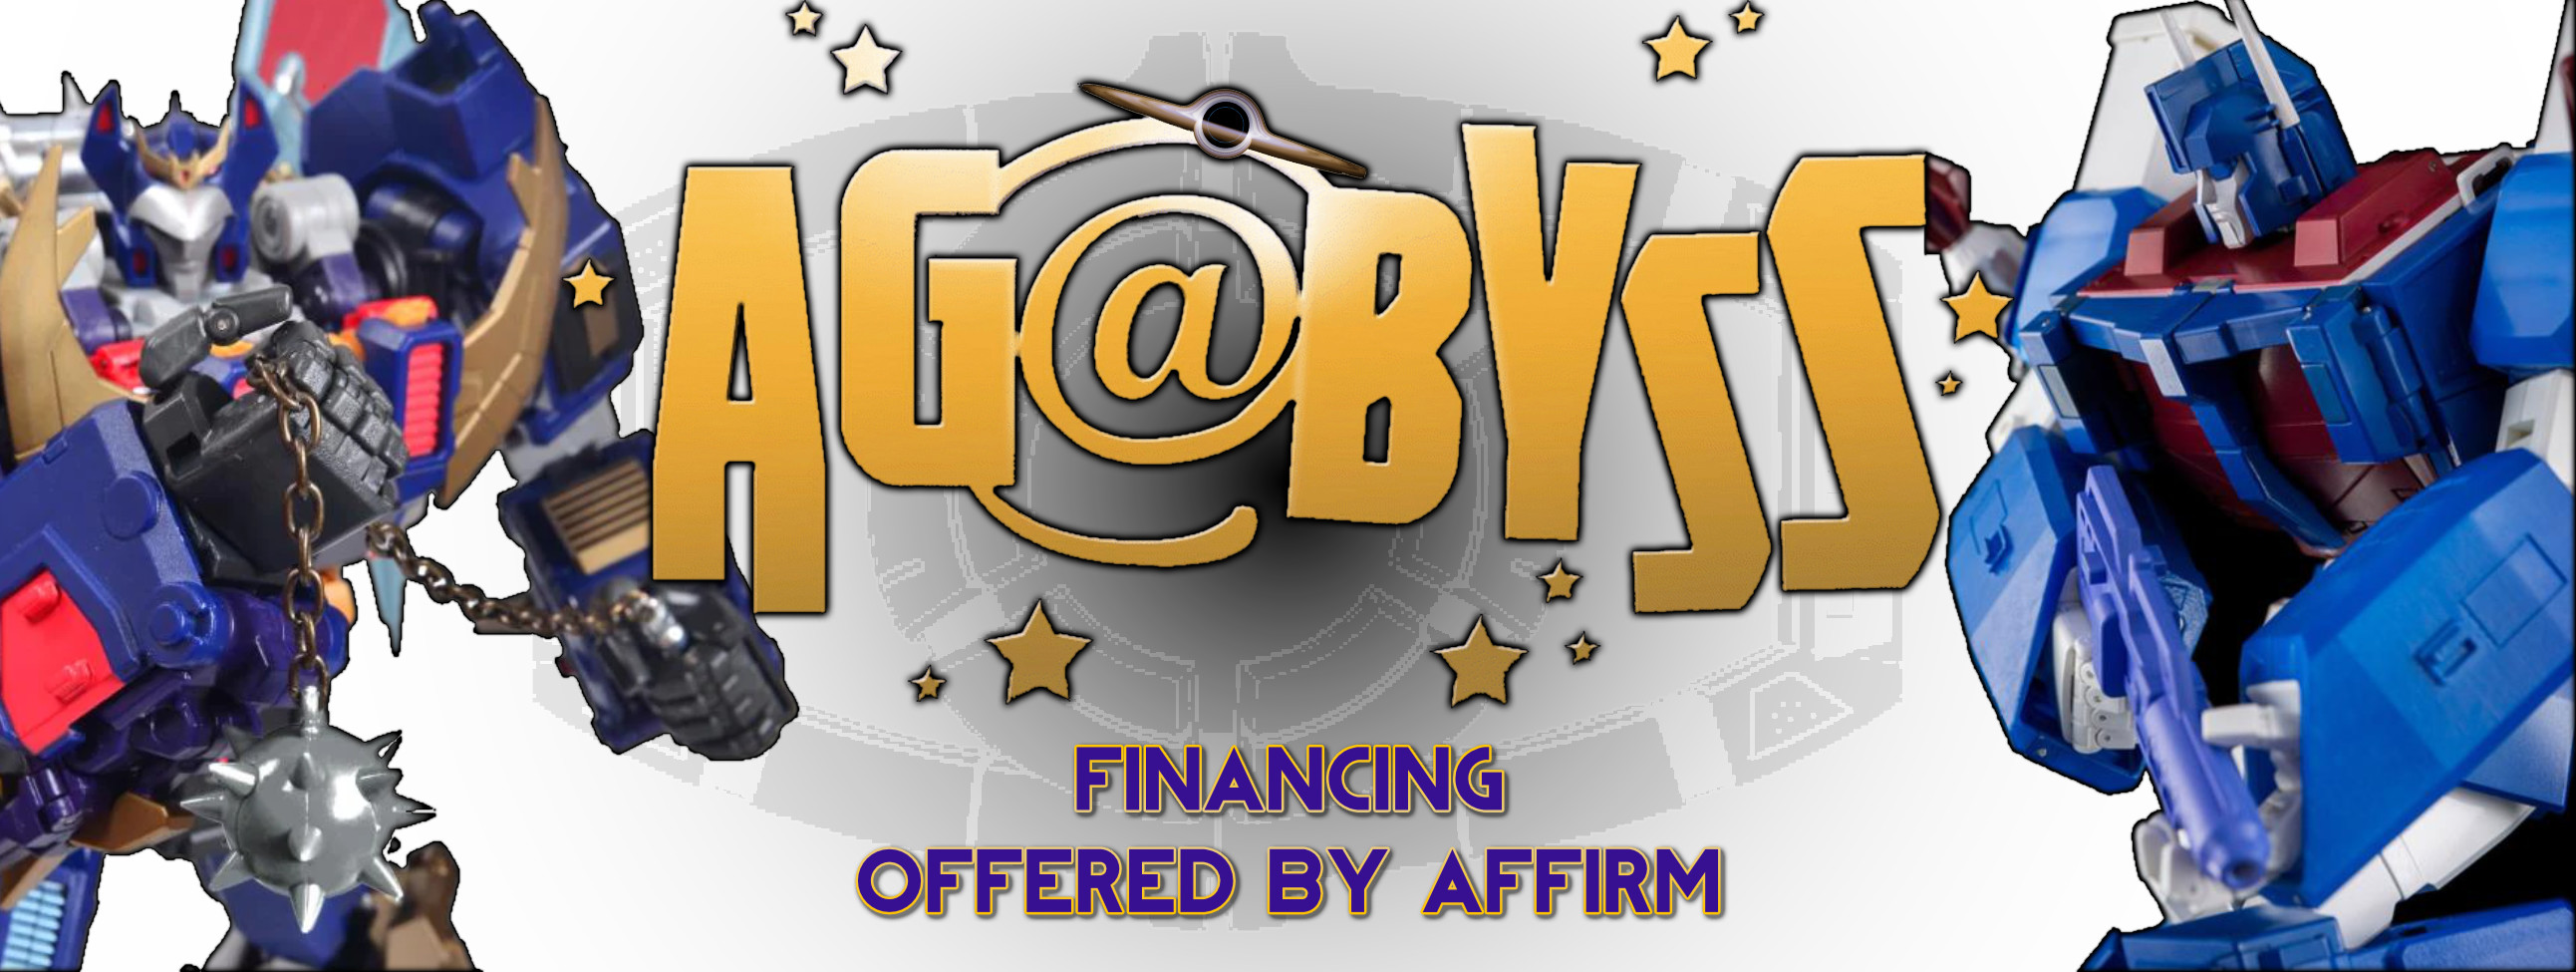 Agabyss Affirm Financing Banner